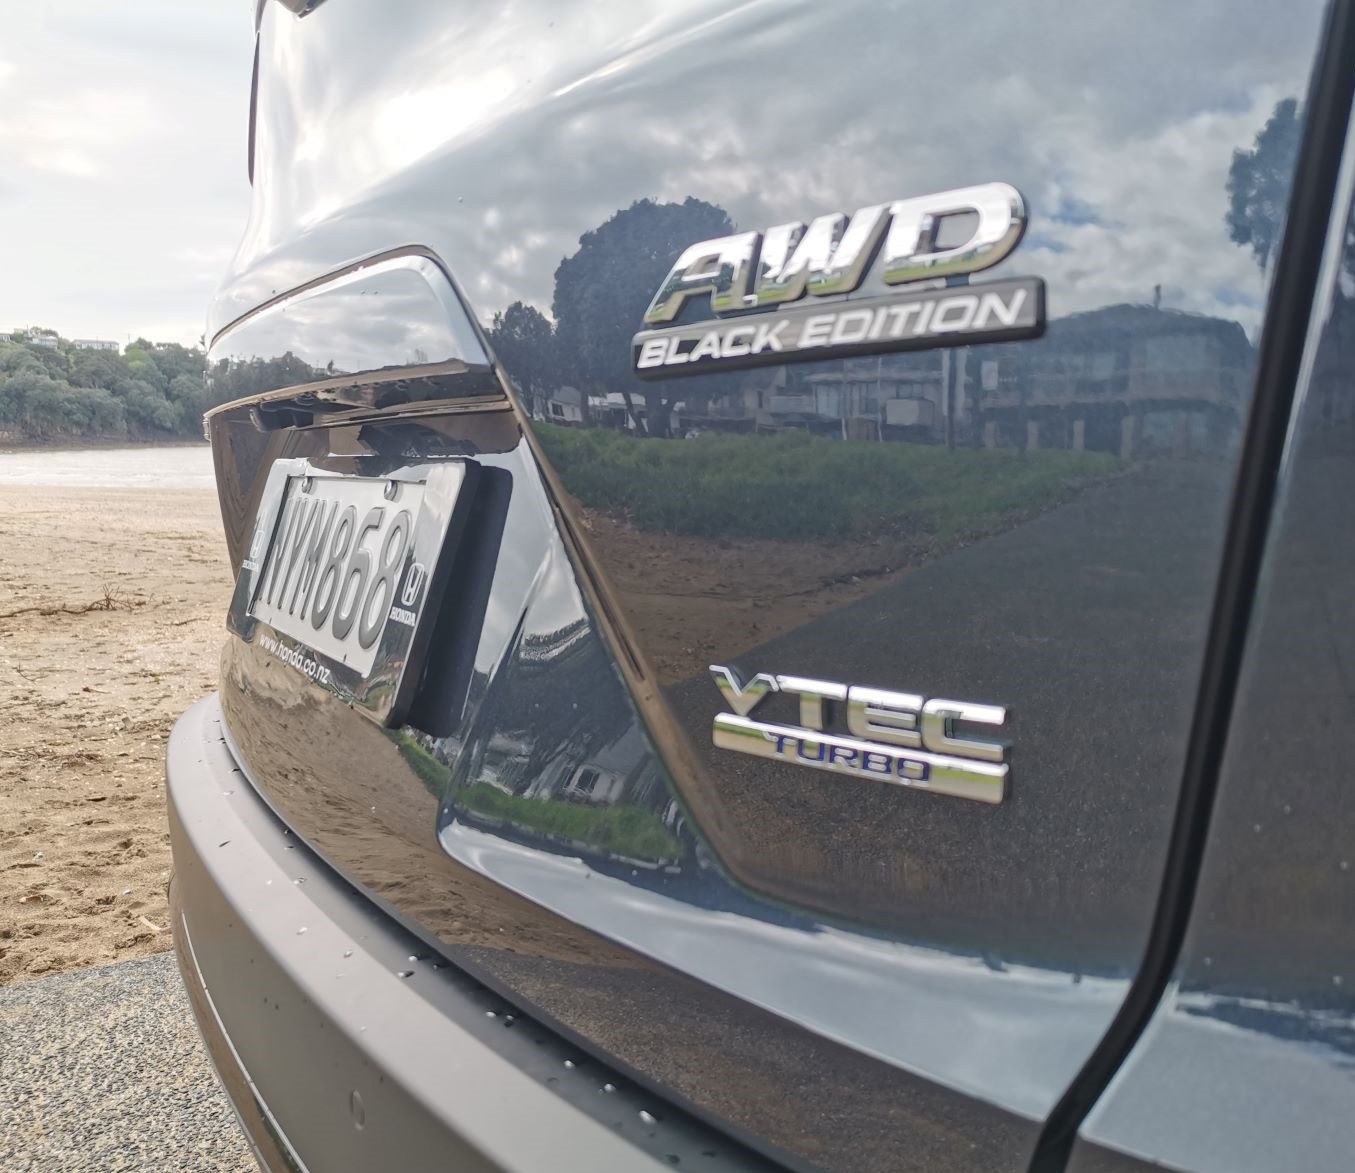 new Honda CR-V review NZ